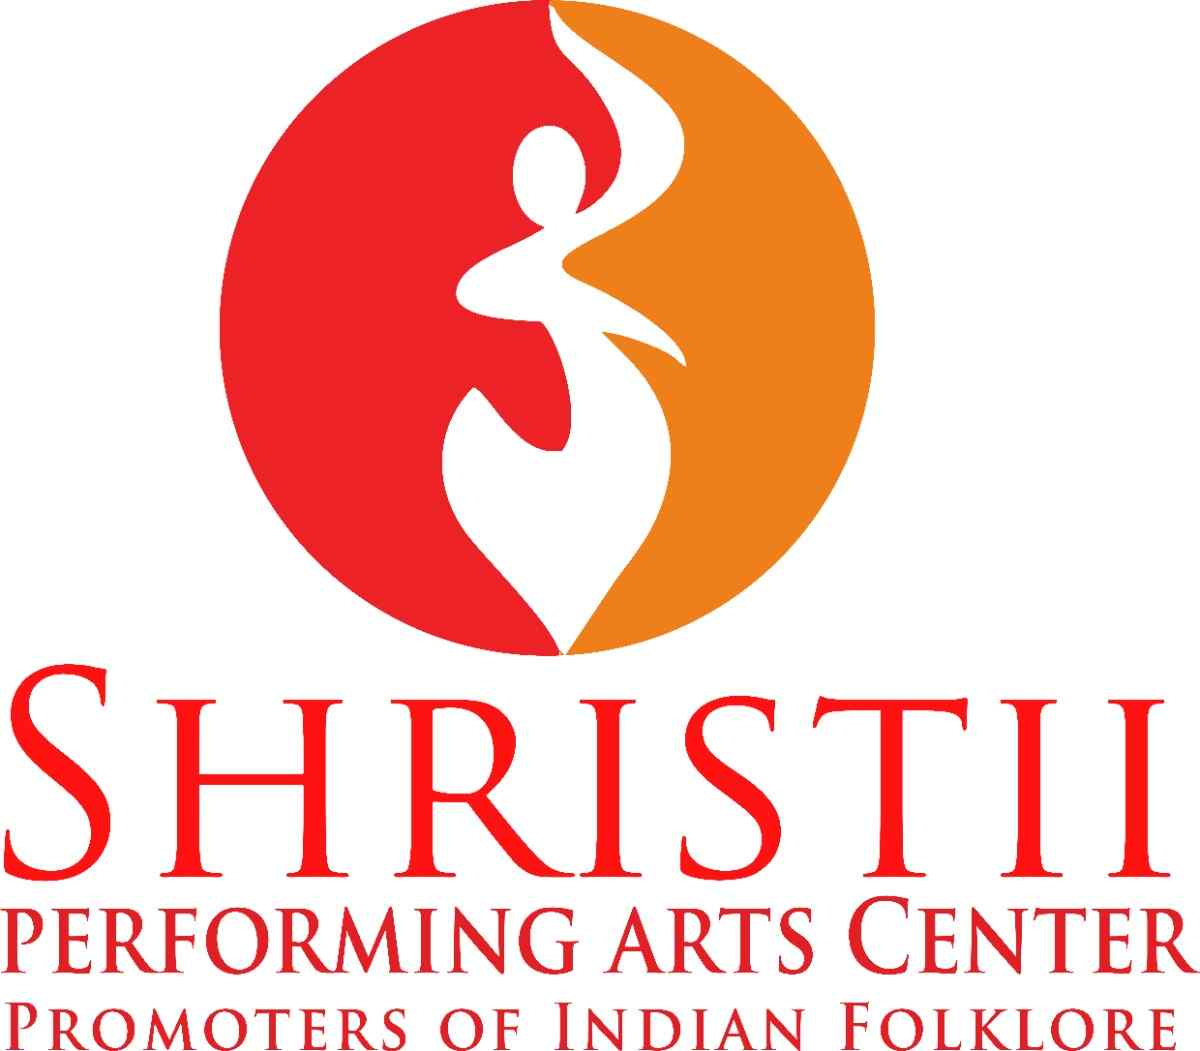 Shristii performing Arts Center